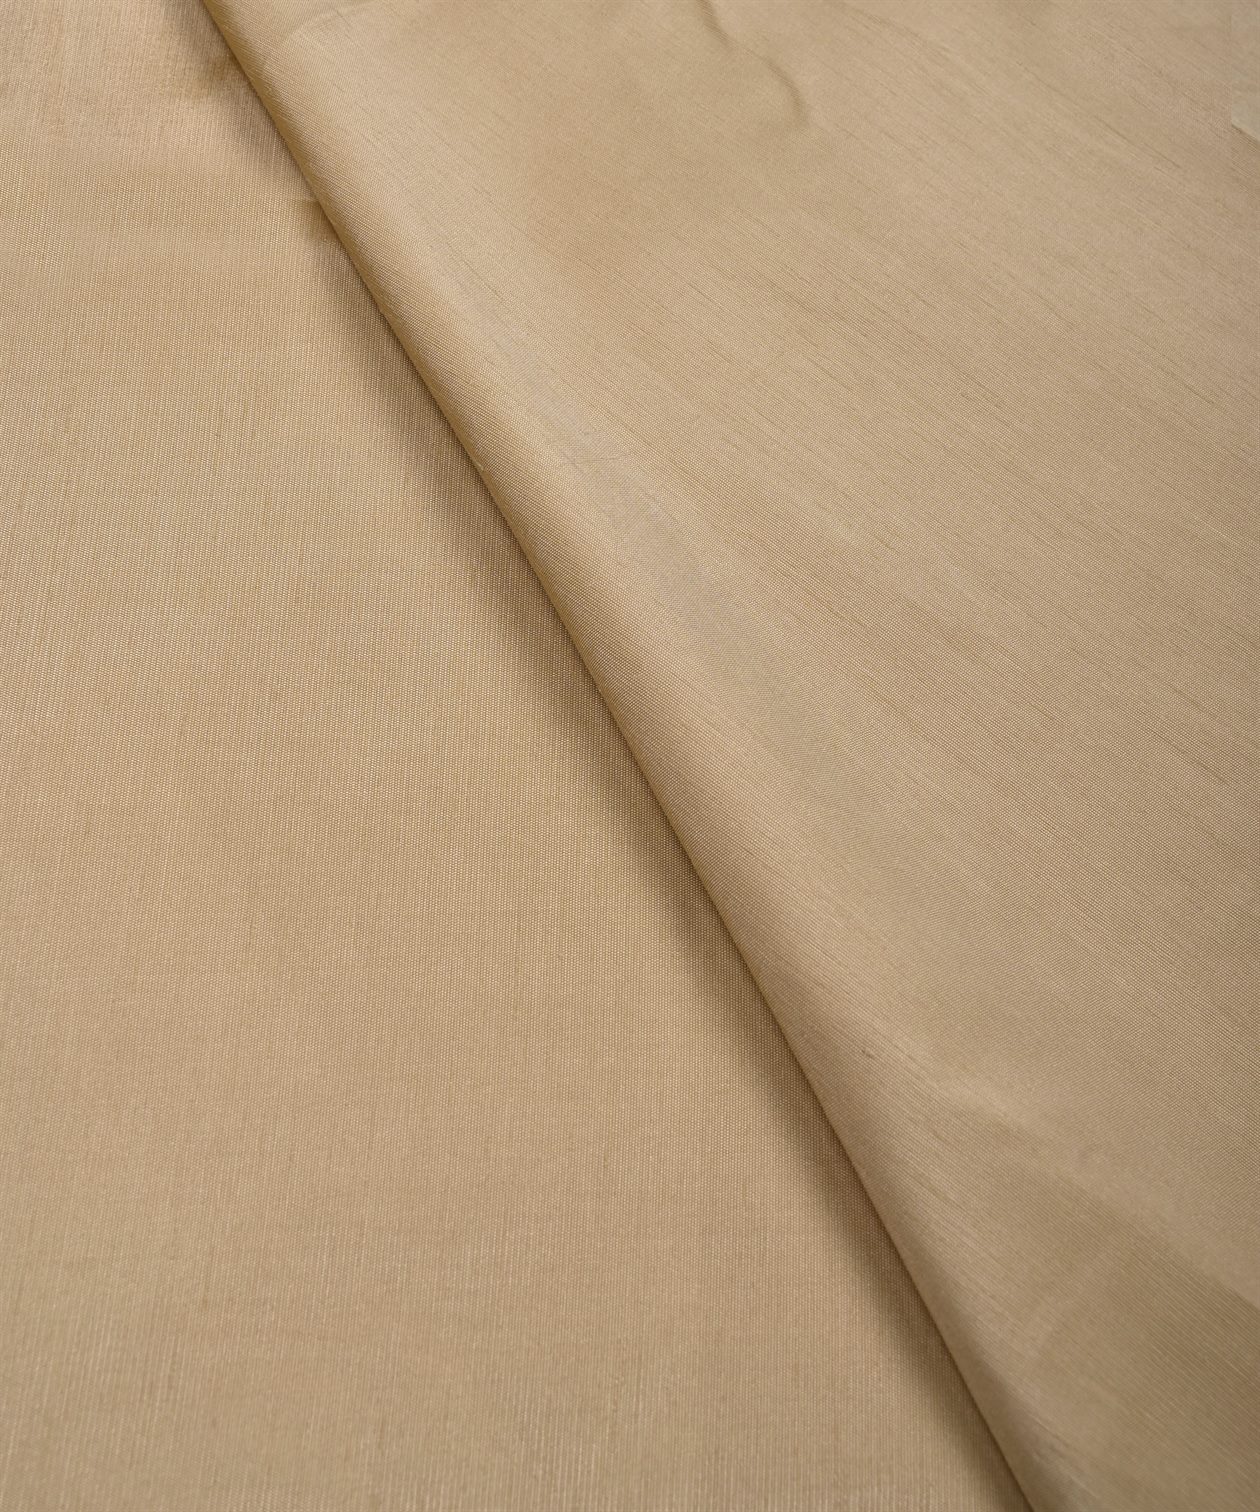 Bone White Plain Dyed Satin Slub Fabric